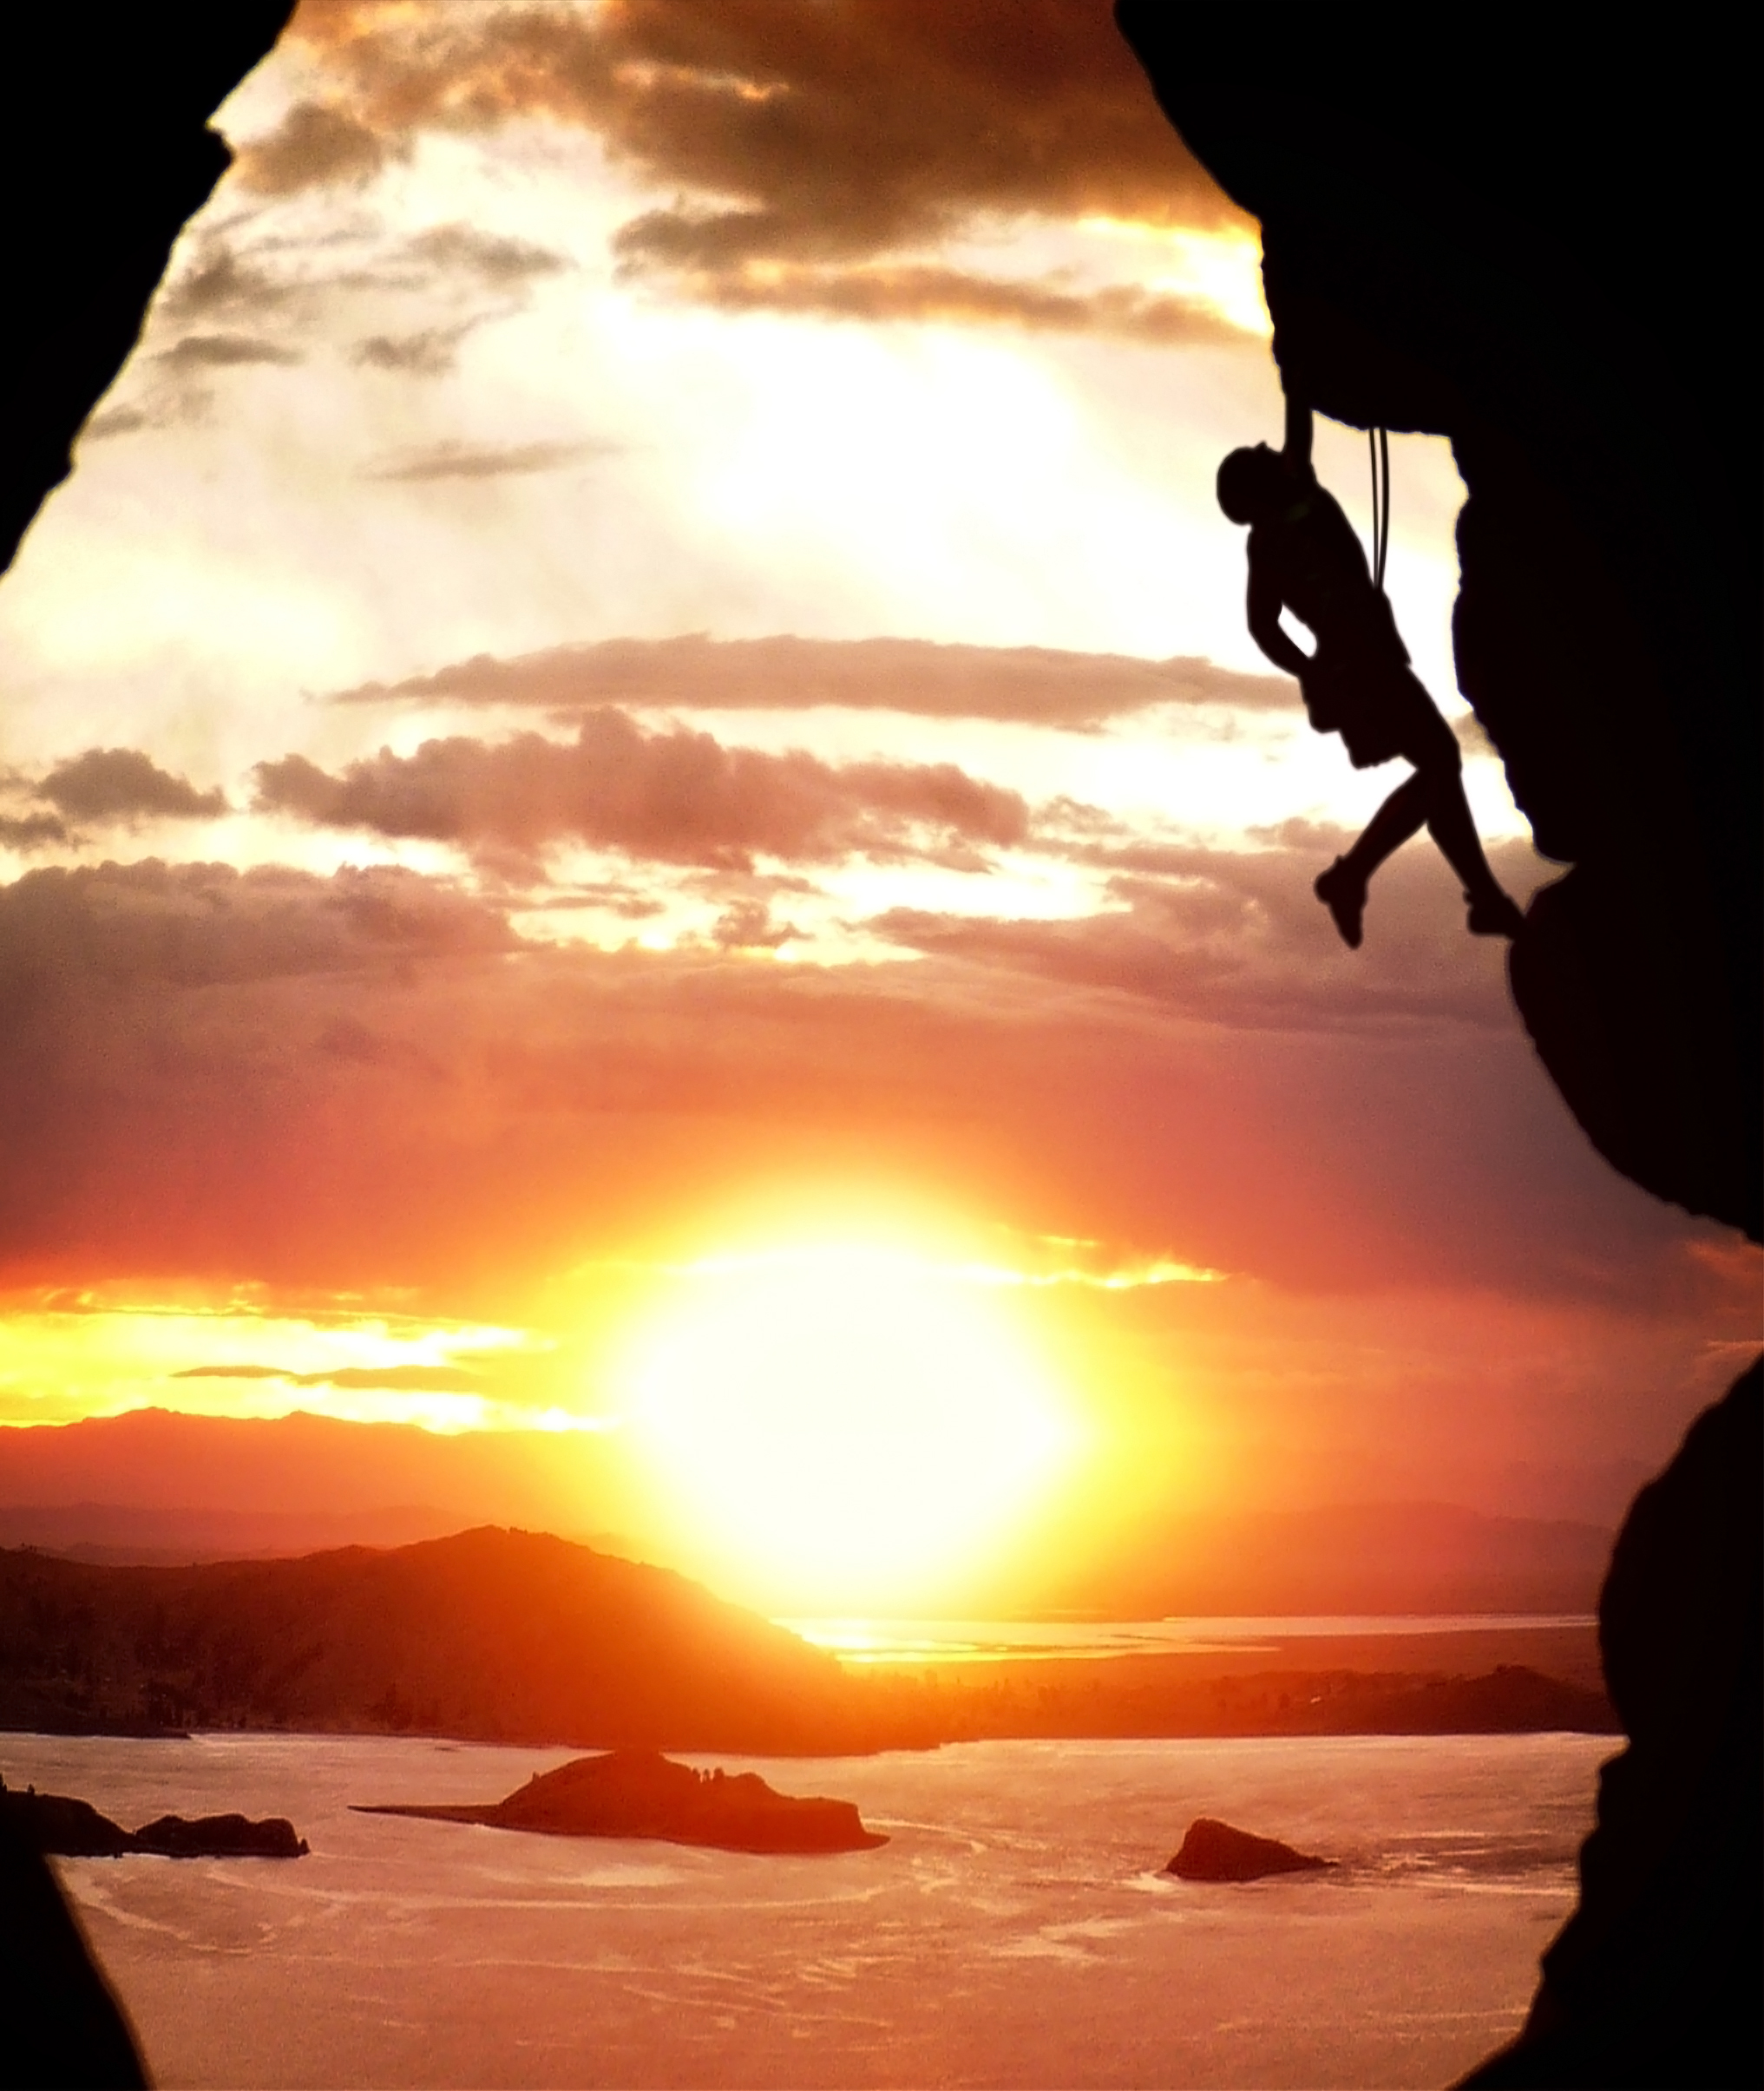 Free-climber rising at sundown, Acrobat, Outdoors, Rope, Rock-climbing, HQ Photo